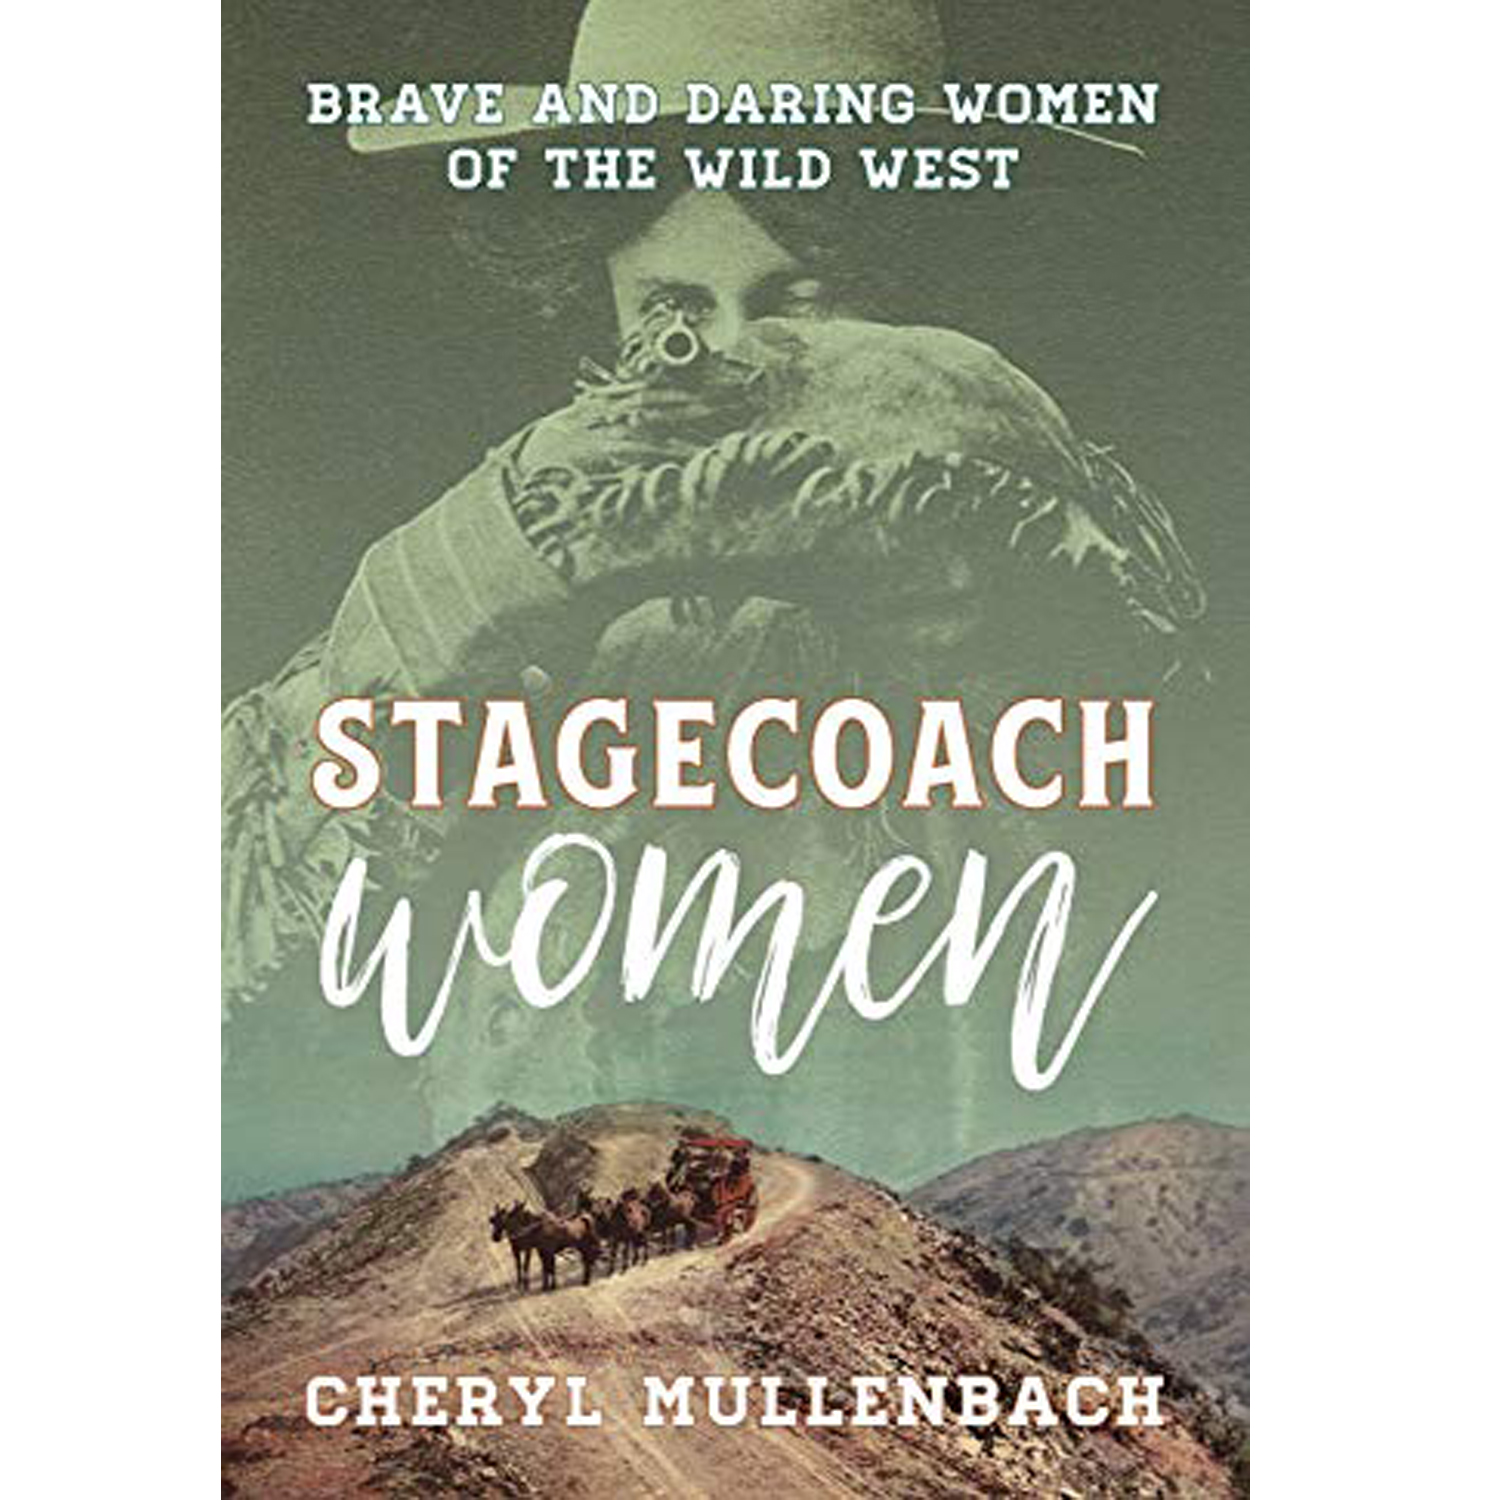 Stagecoach women book